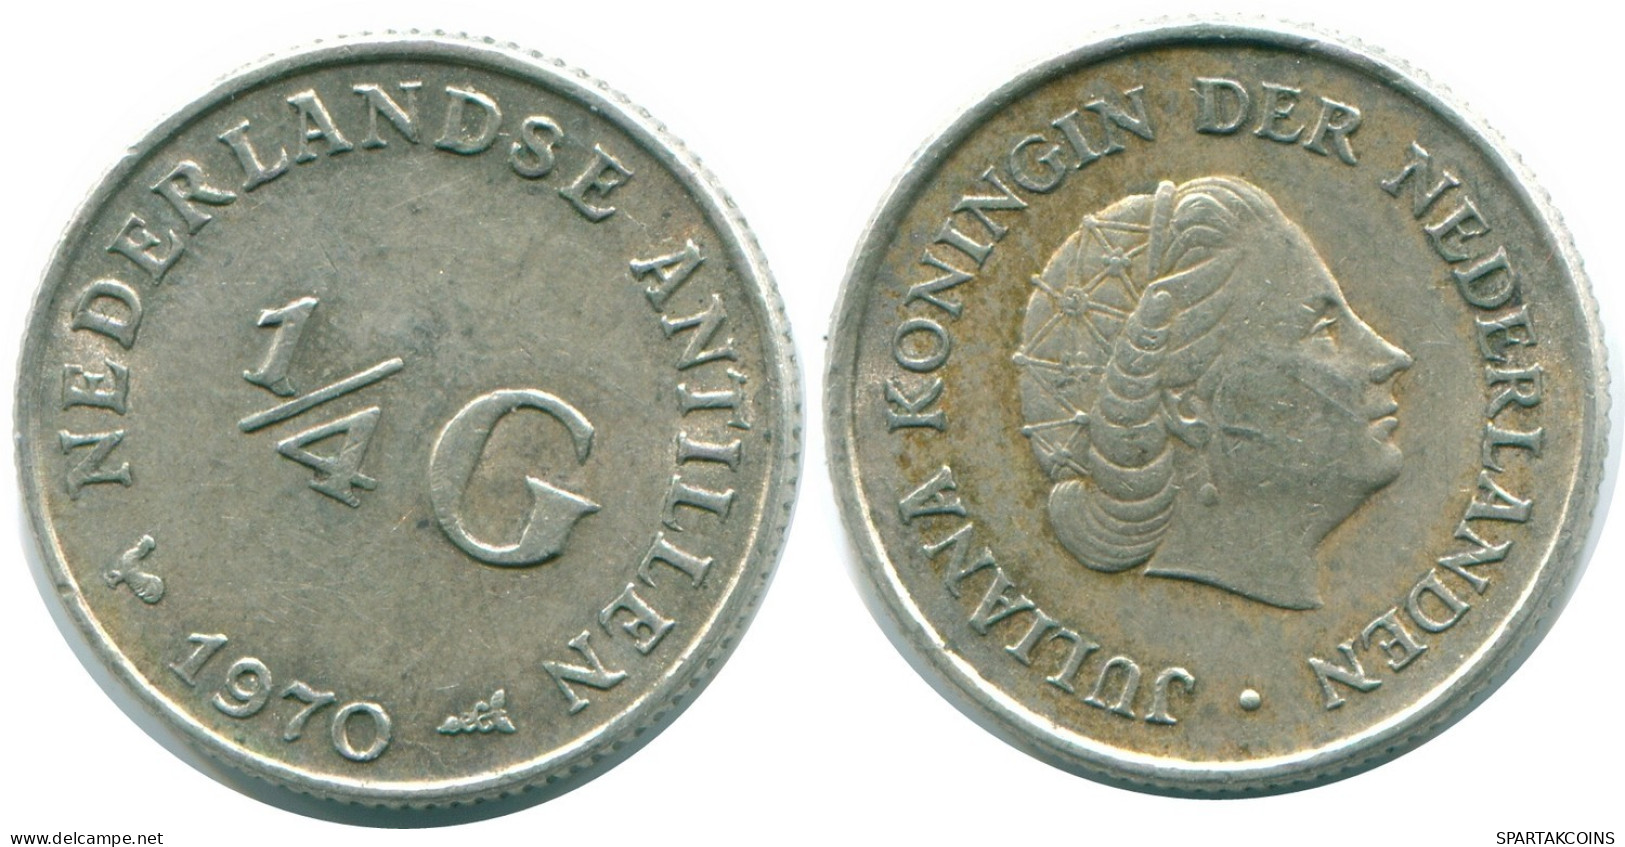 1/4 GULDEN 1970 NETHERLANDS ANTILLES SILVER Colonial Coin #NL11688.4.U.A - Netherlands Antilles